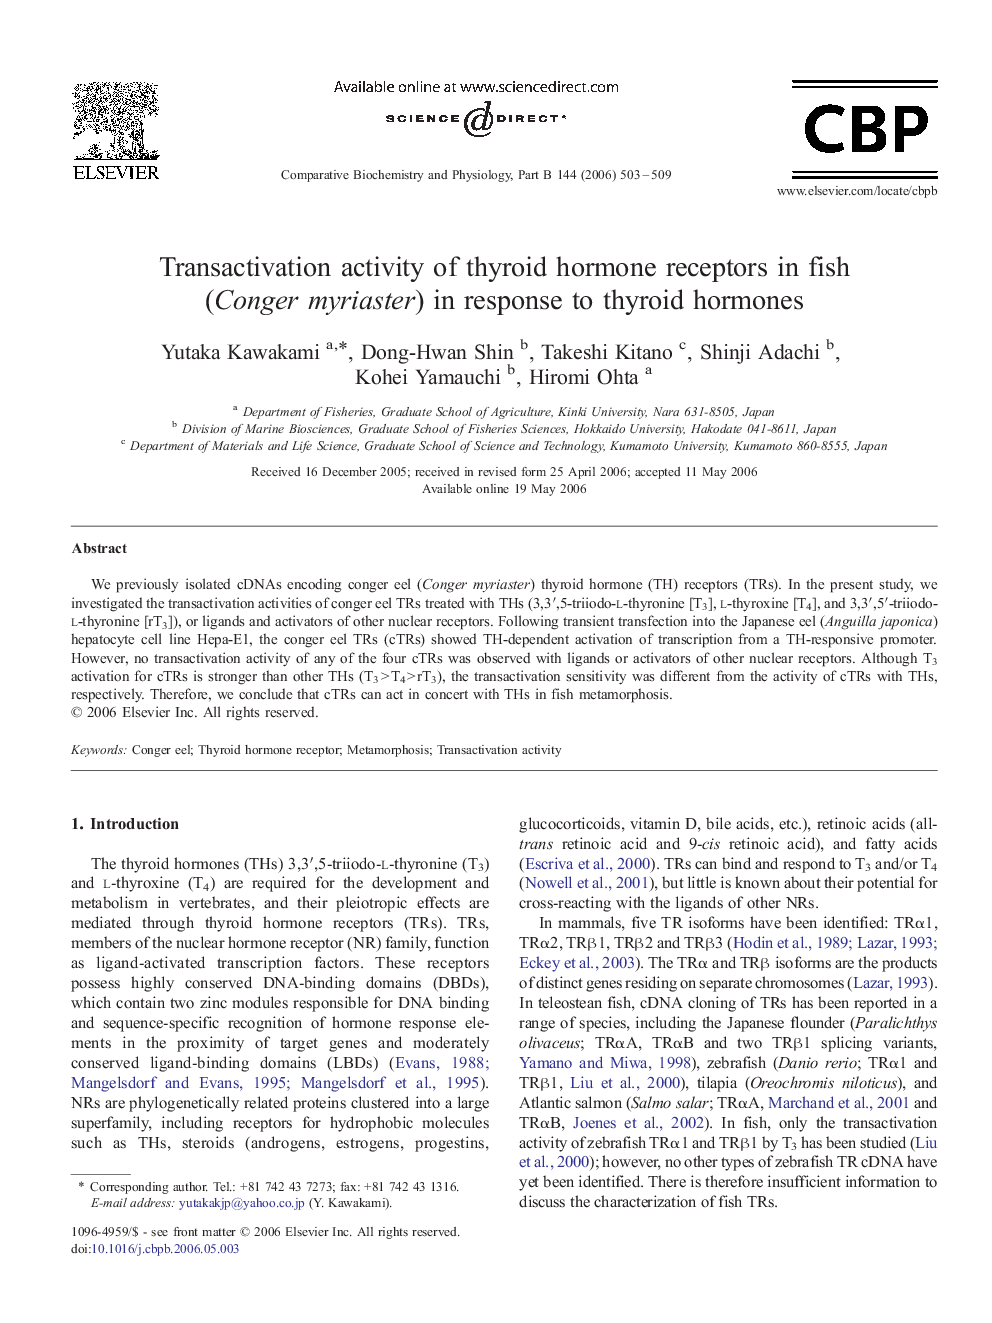 Transactivation activity of thyroid hormone receptors in fish (Conger myriaster) in response to thyroid hormones